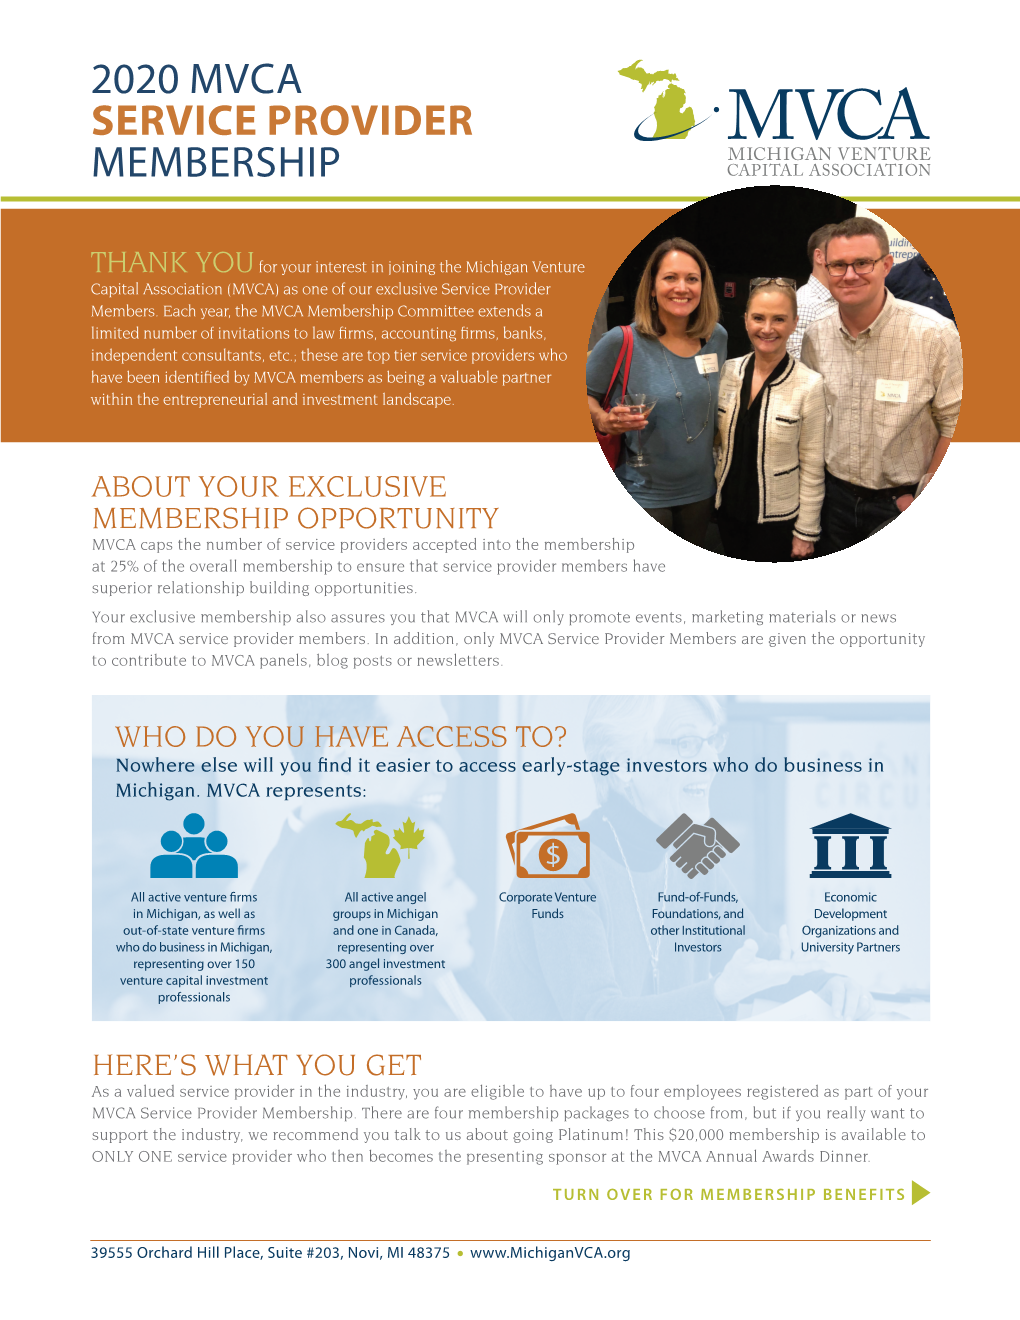 2020 Mvca Service Provider Membership